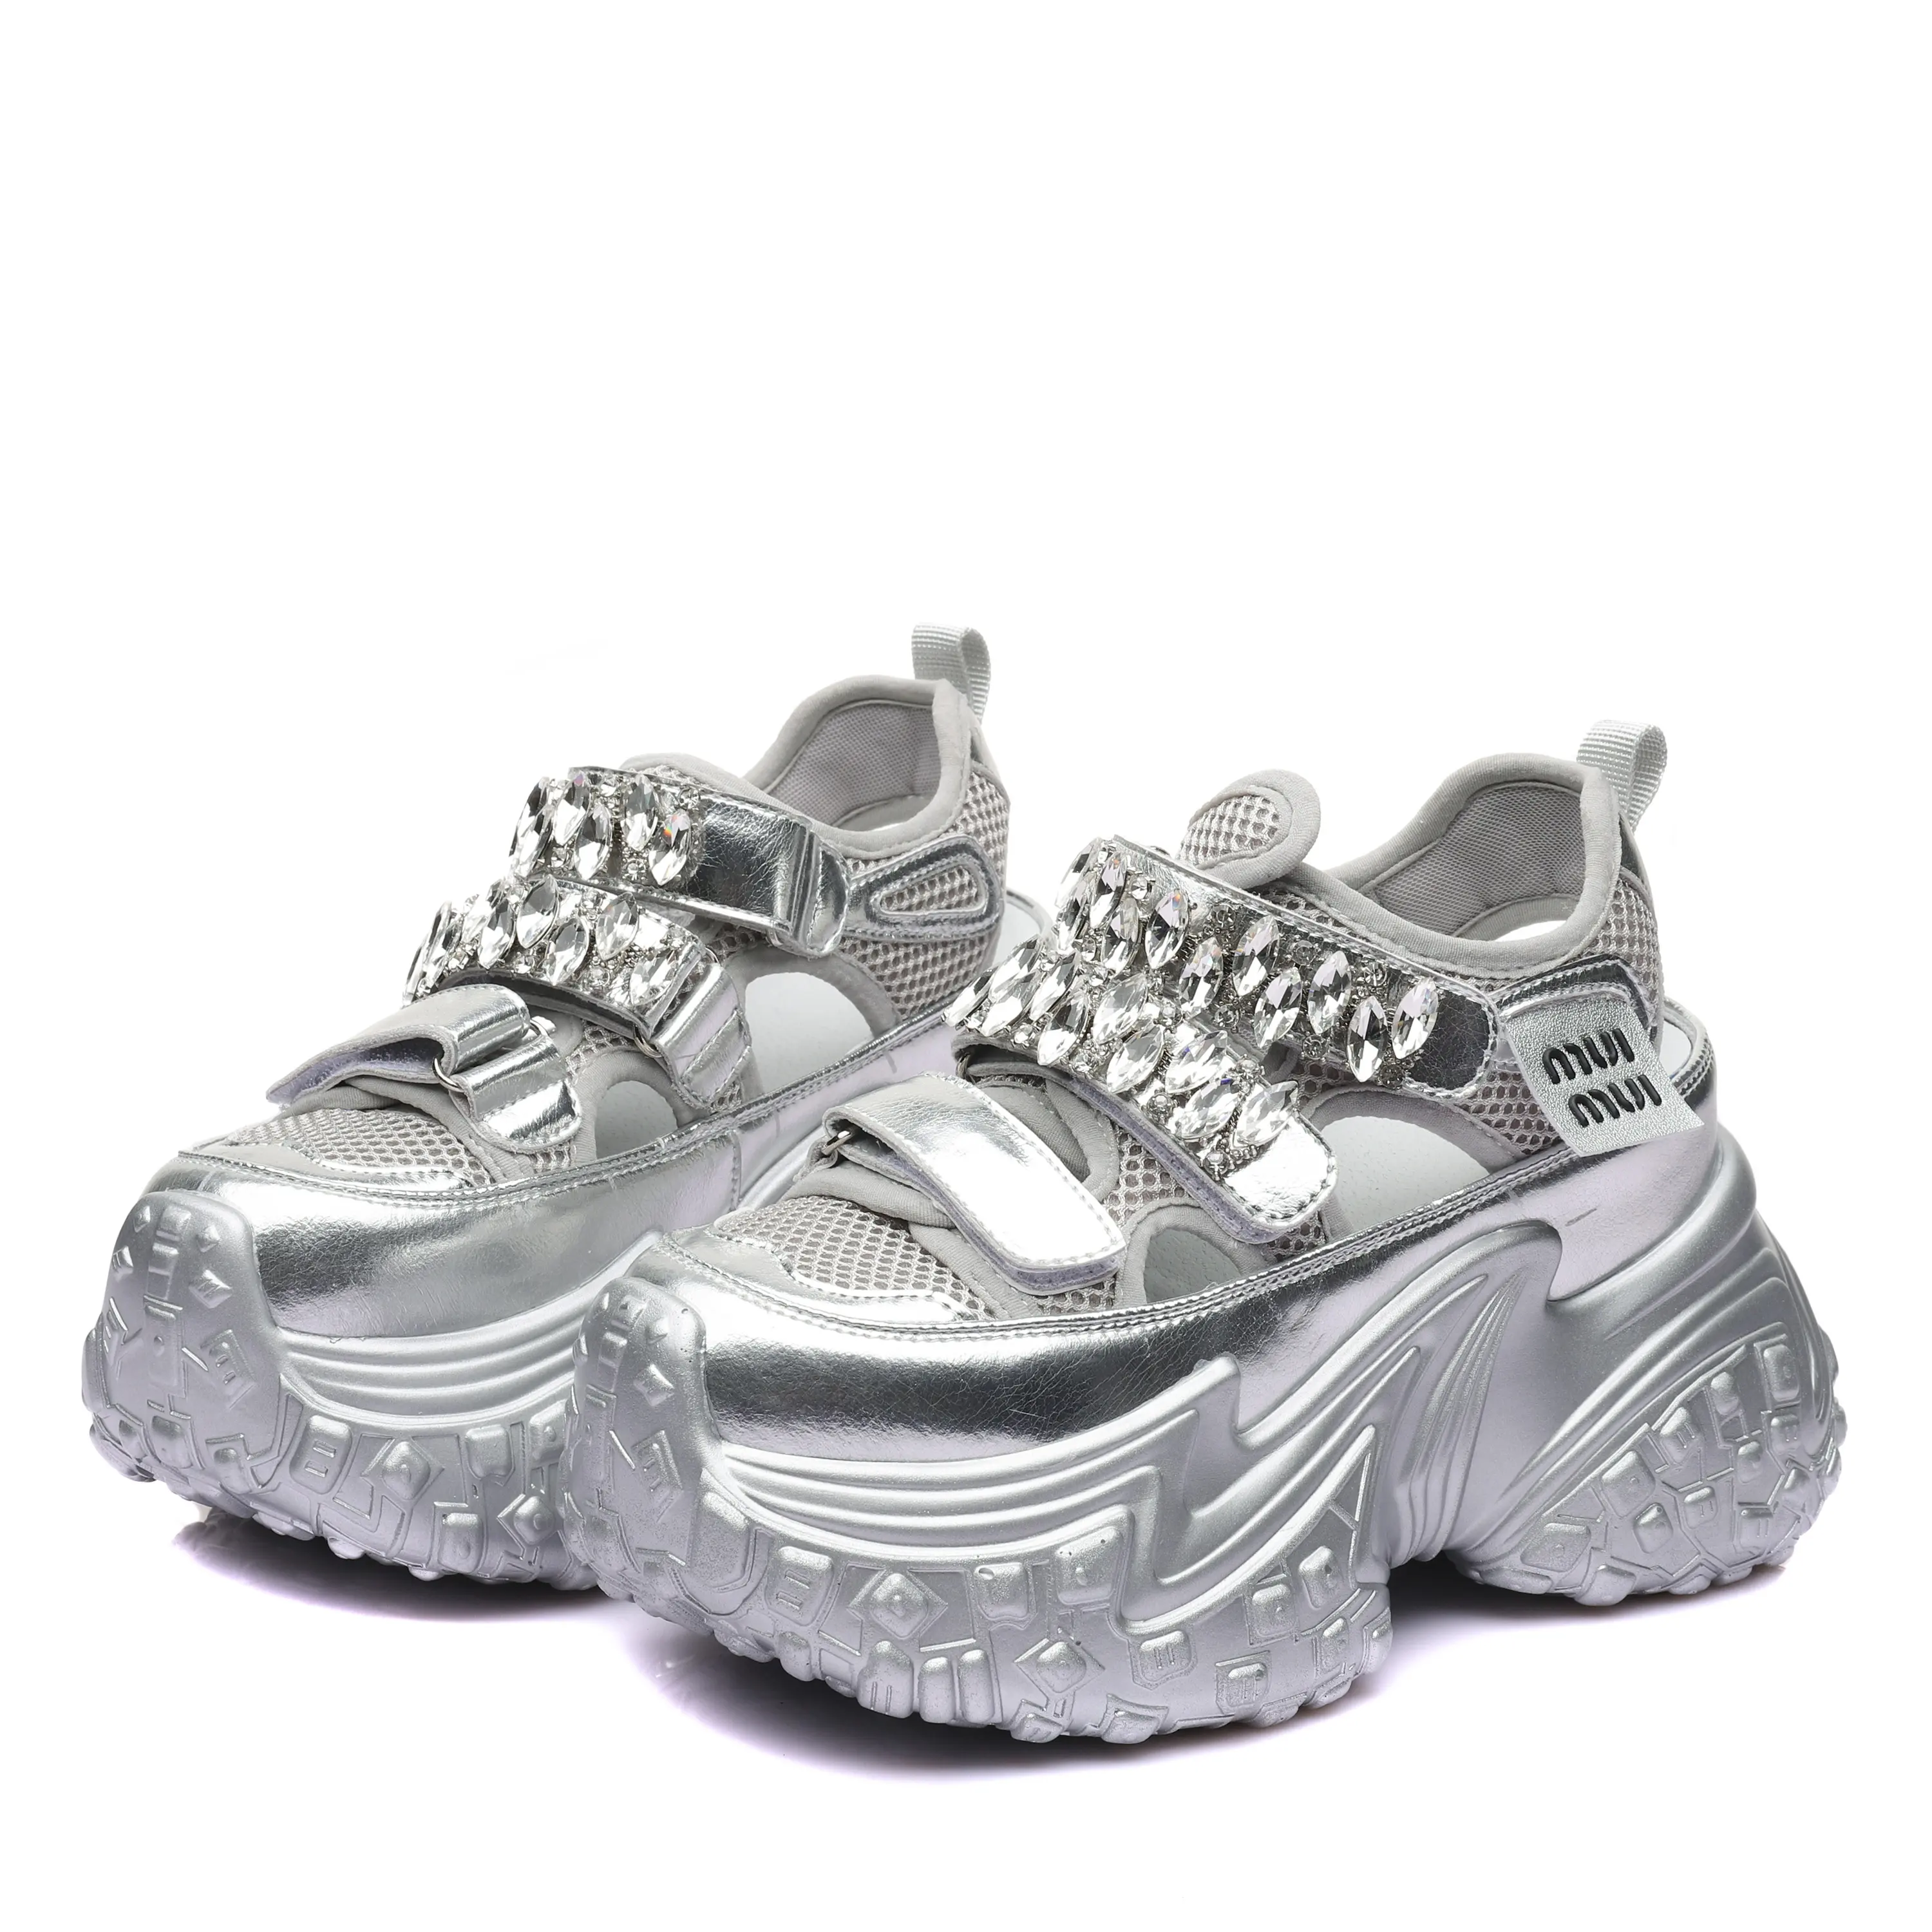 New Arrival Fashion Crystal Strap Buckle Breathable Glitter Sandals Platform Wedges Sandals